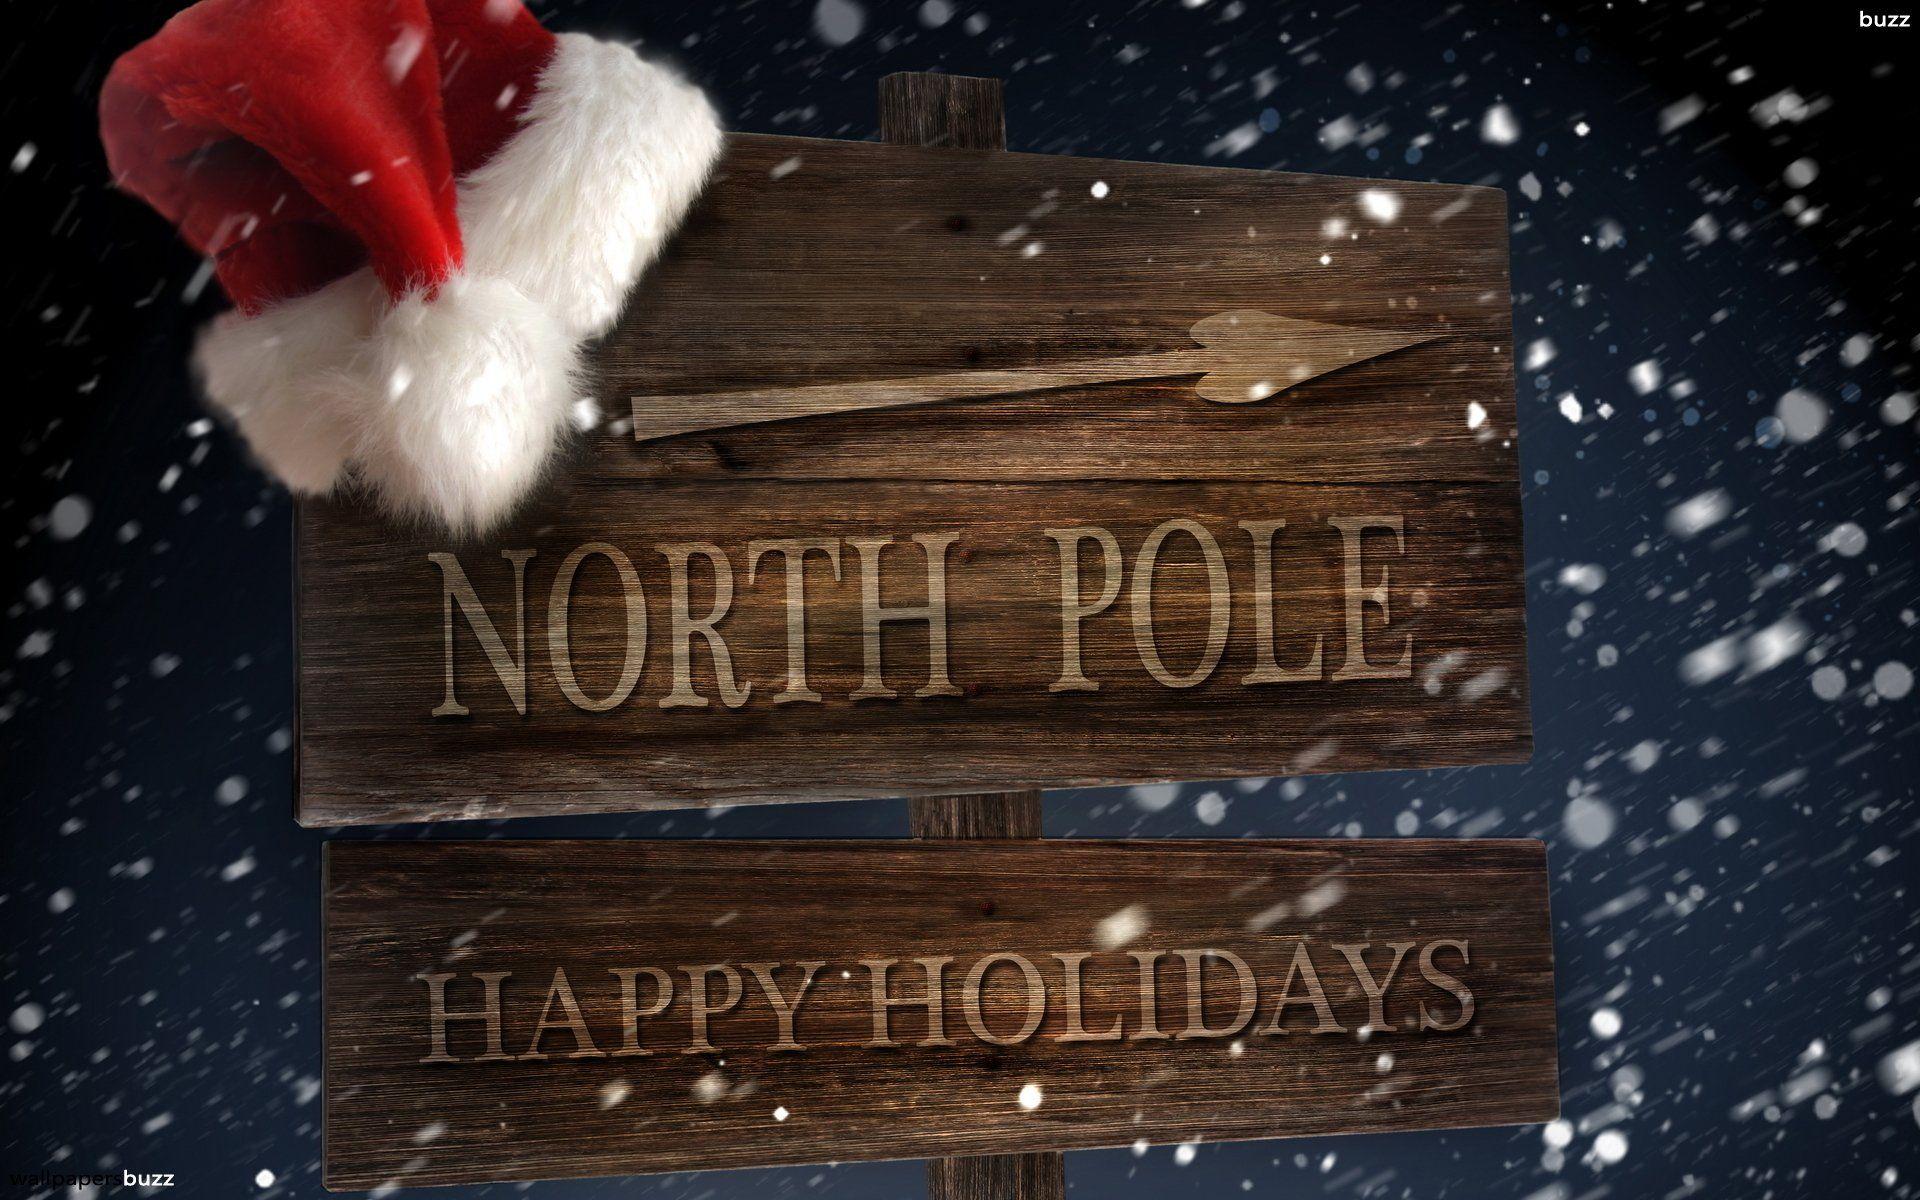 The The North Pole HD Wallpaper